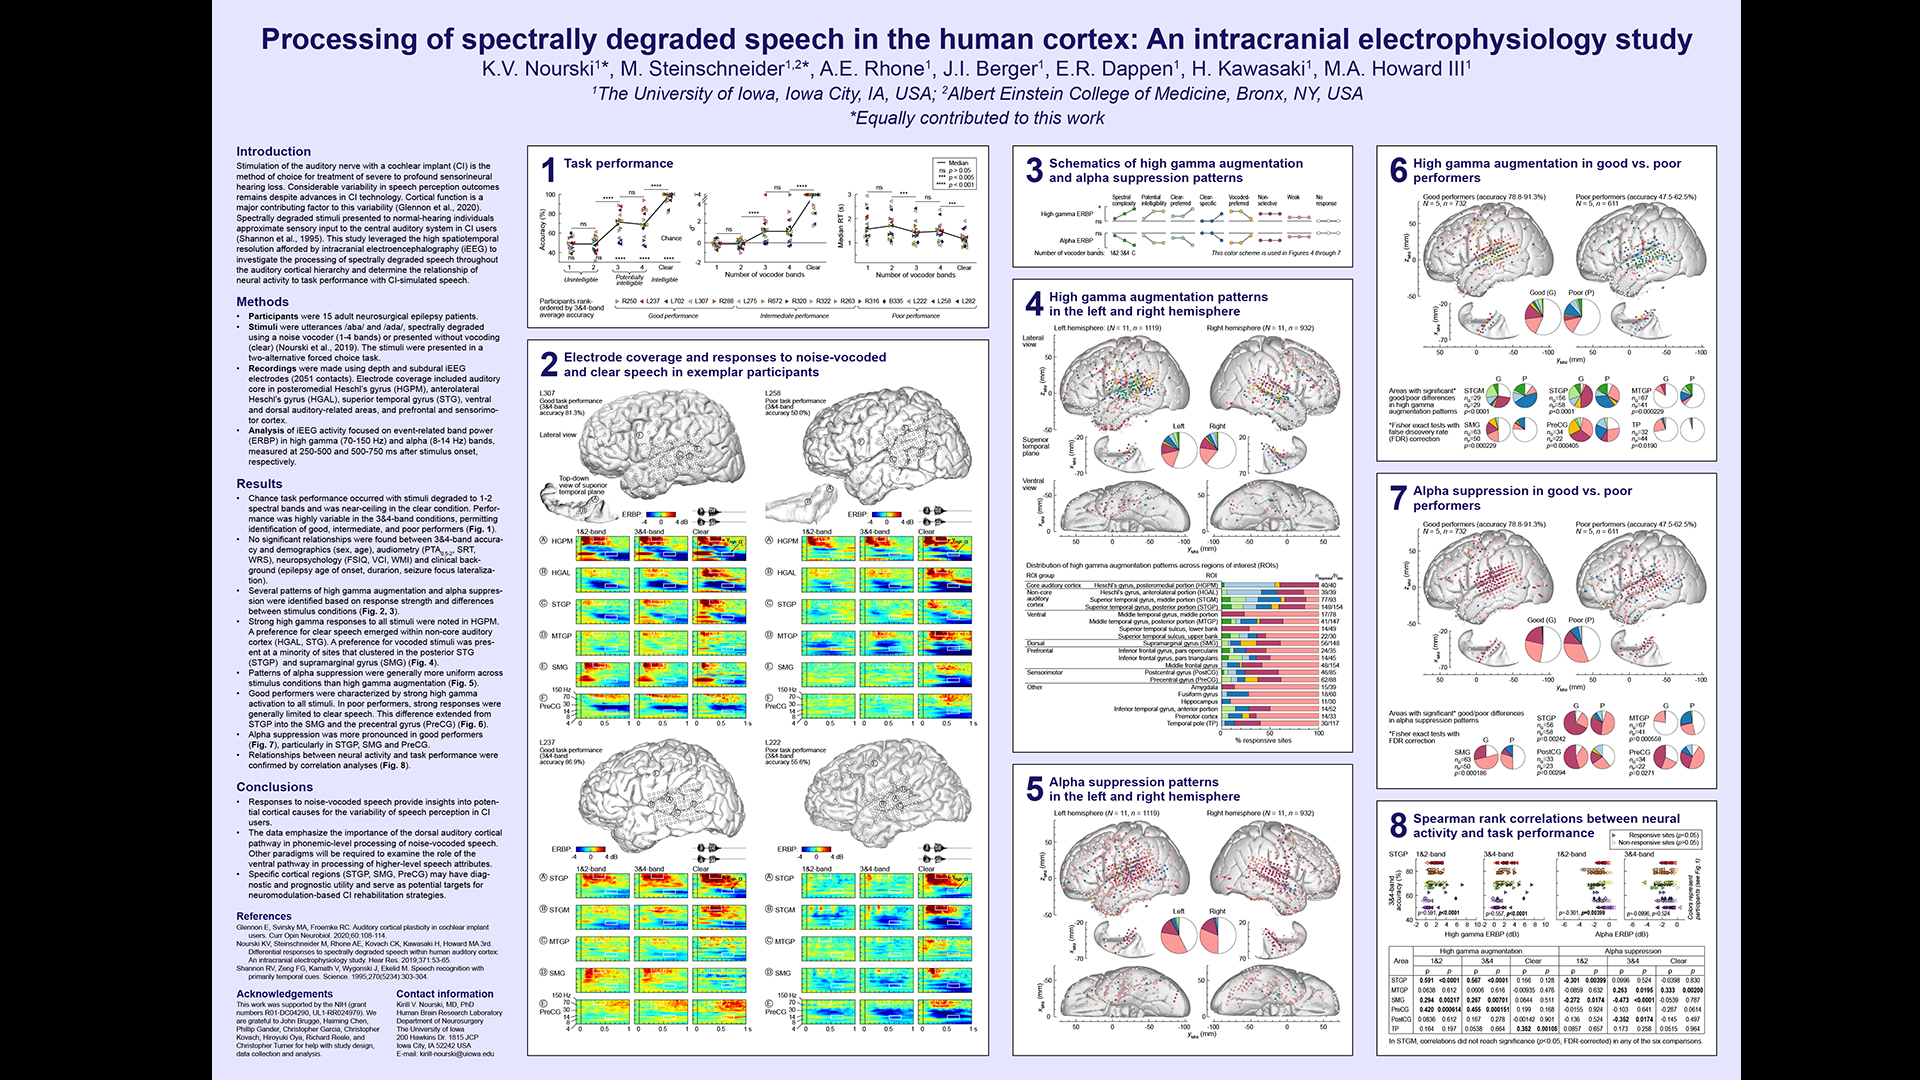 Nourski: Processing of spectrally degraded speech in human cortex